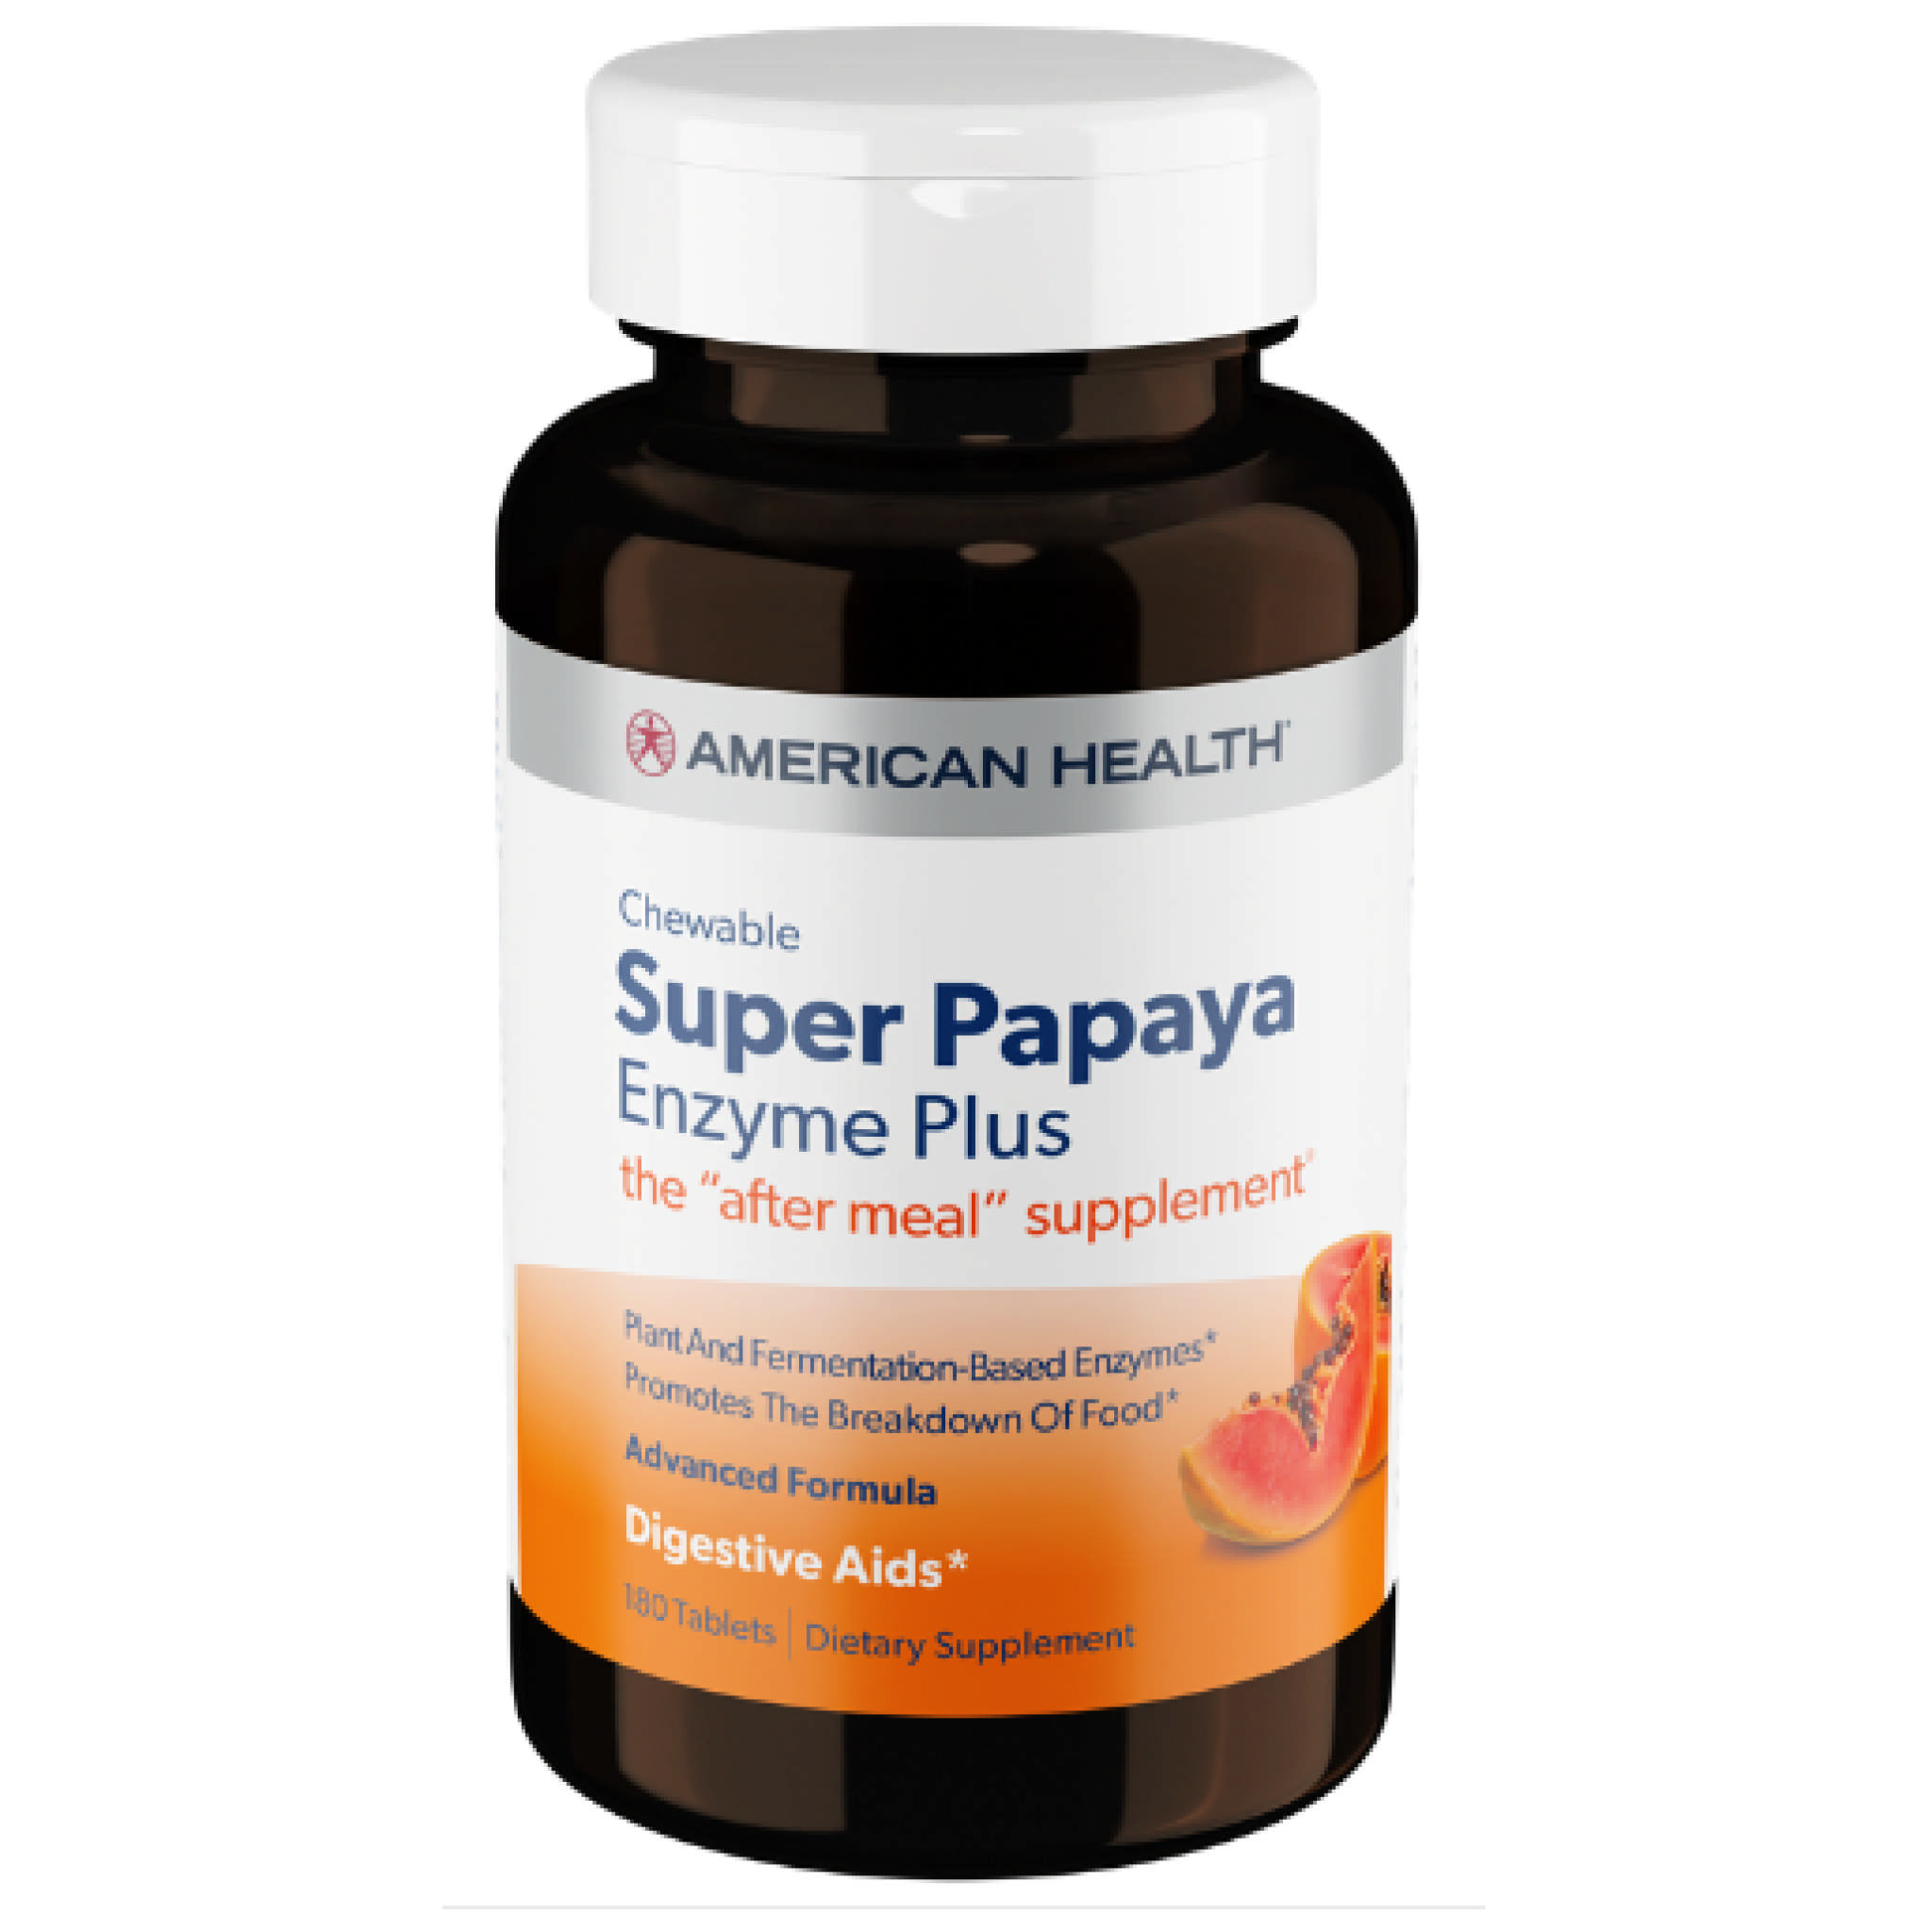 American Health - Papaya Enz Plus Super